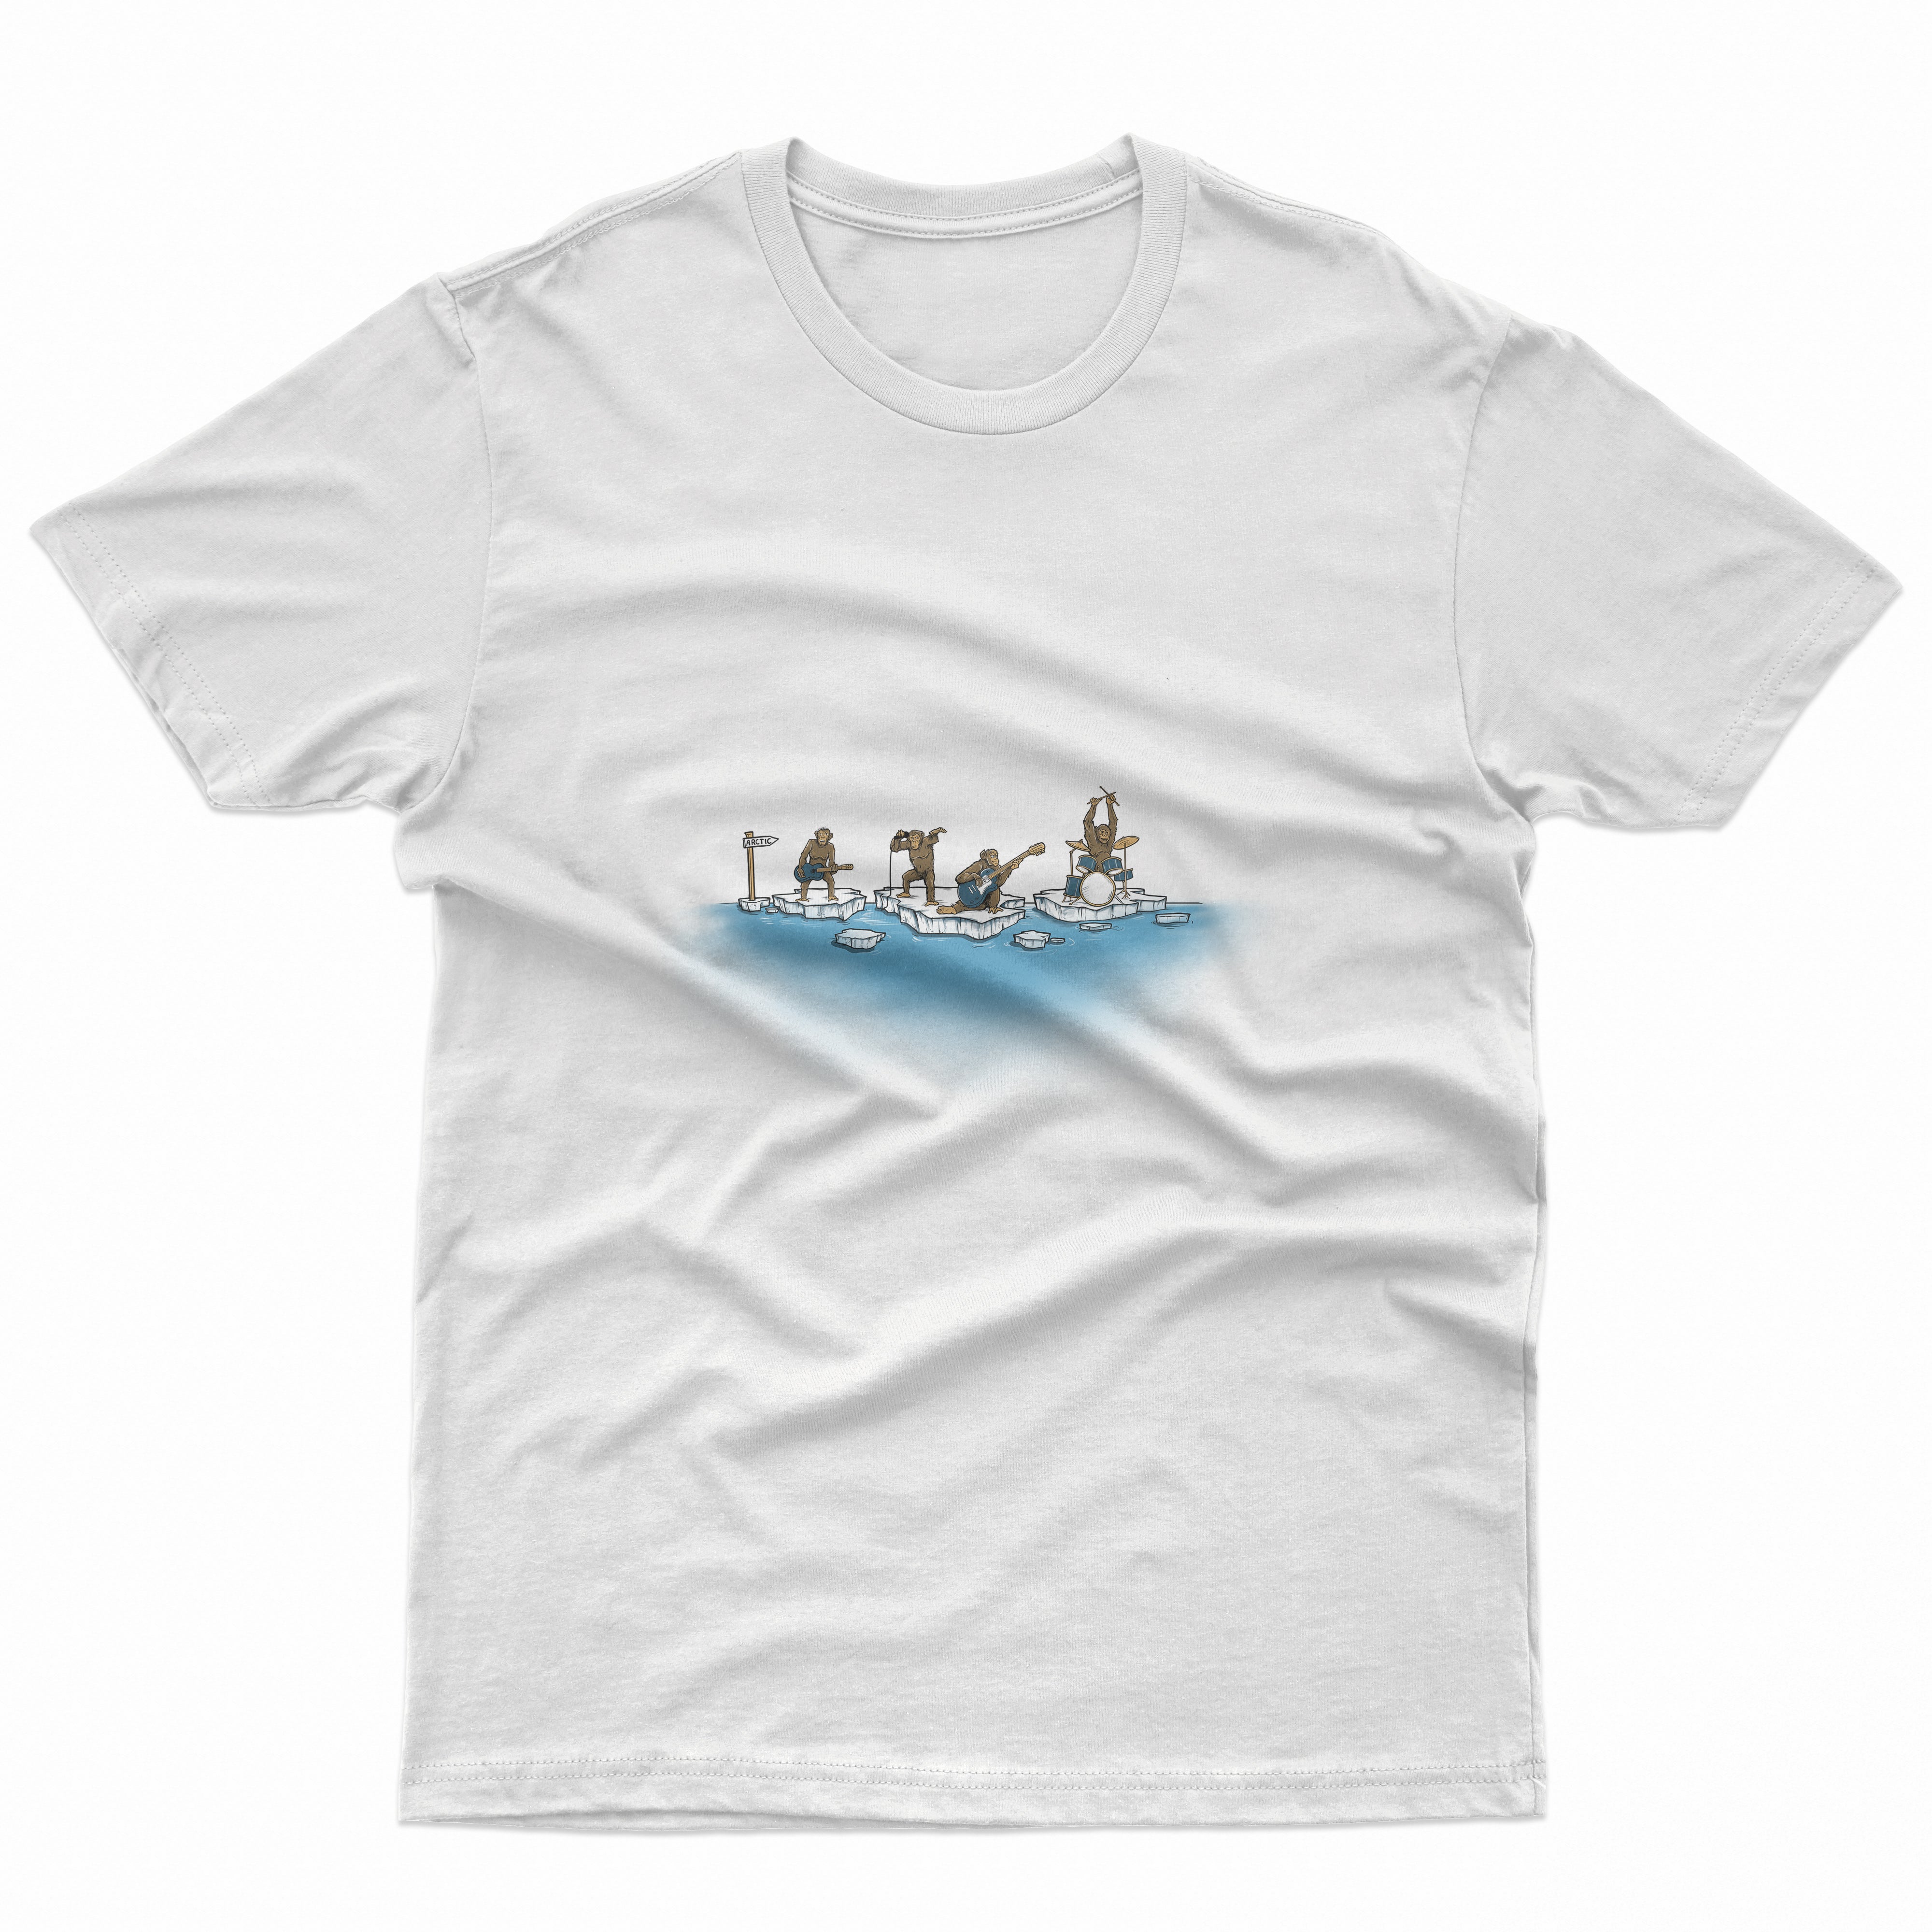 Arctic Monkey Band T Shirt